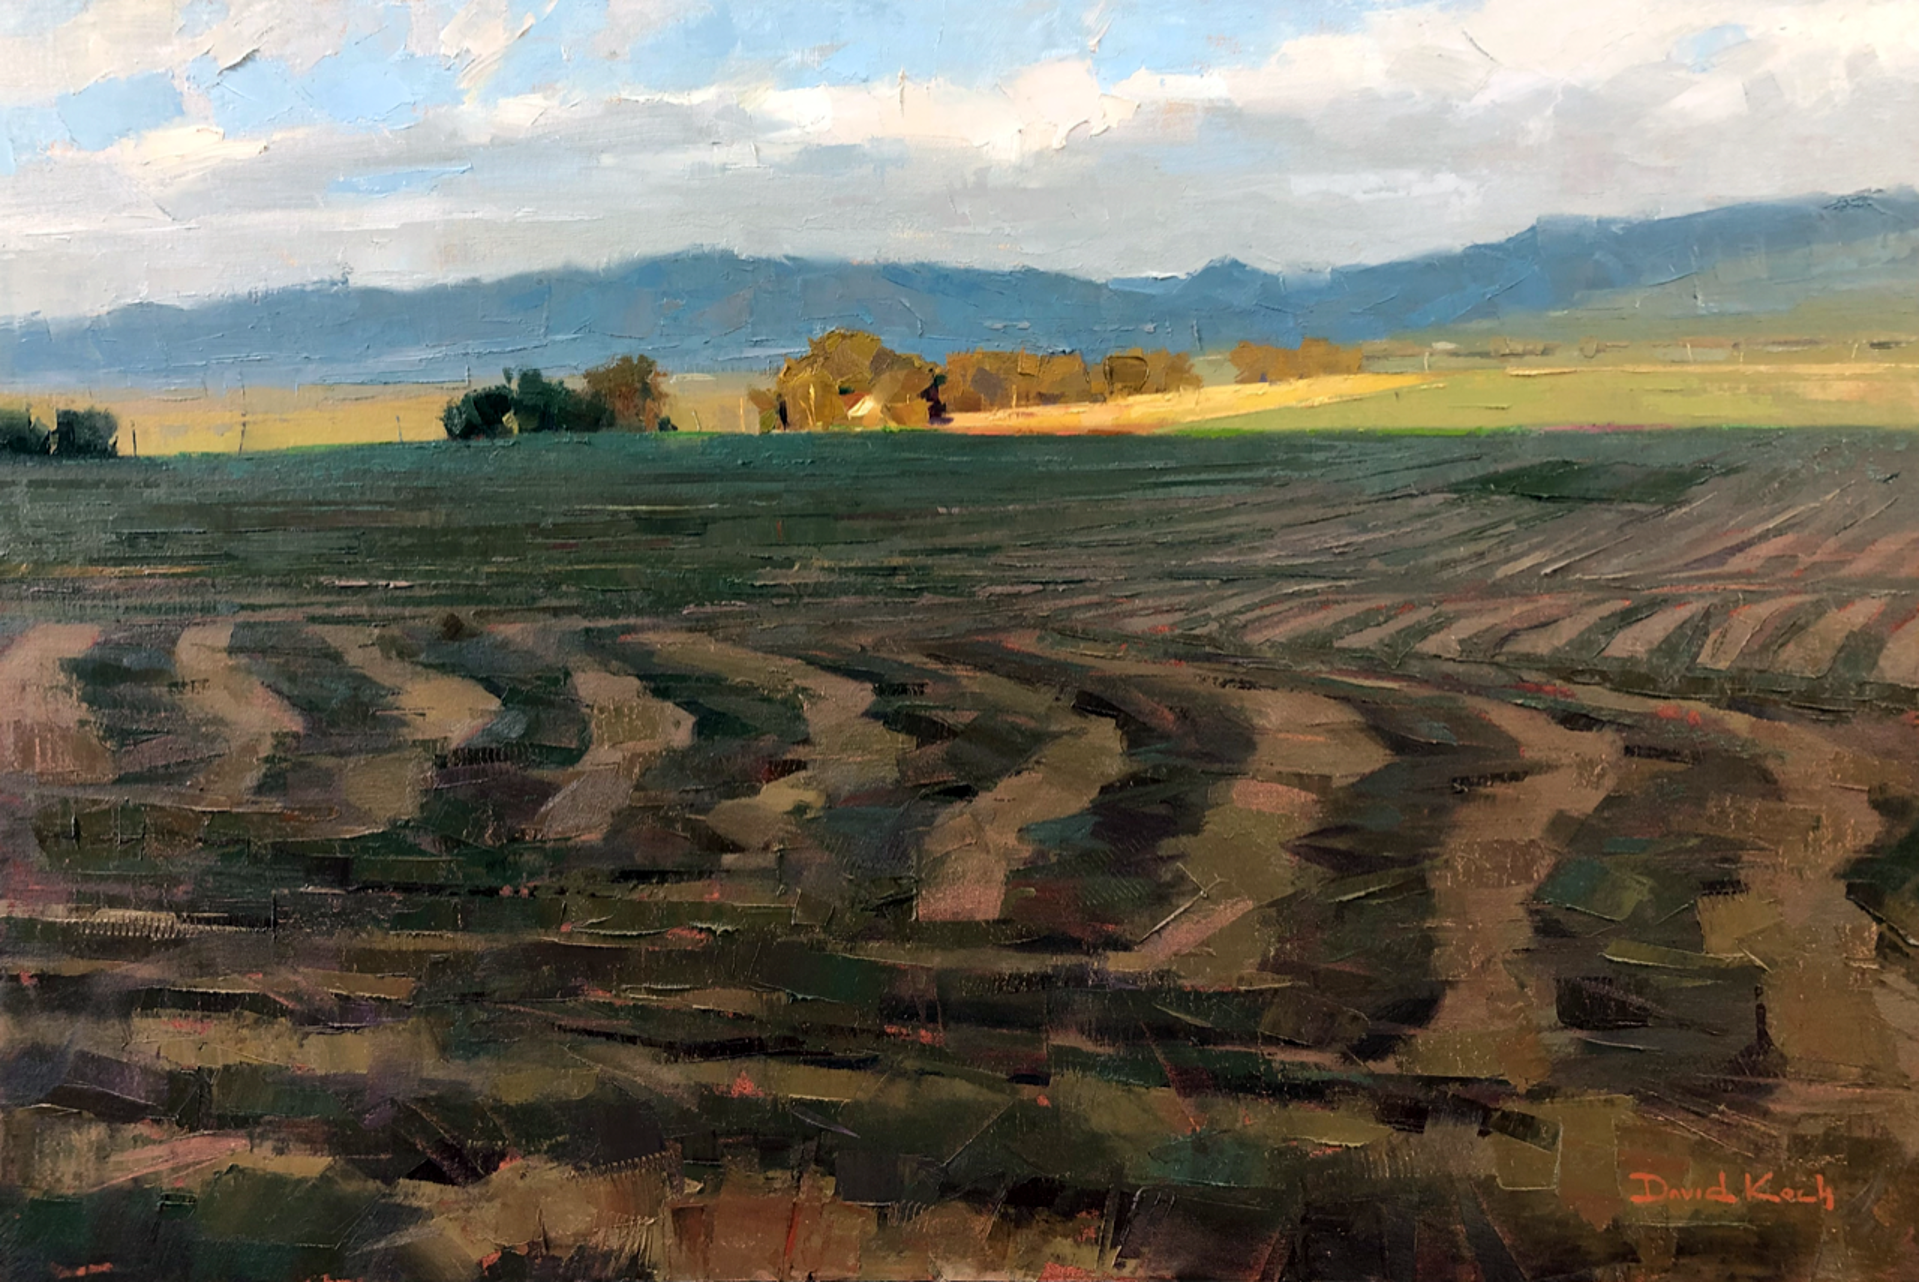 Second Crop Patterns by David Koch